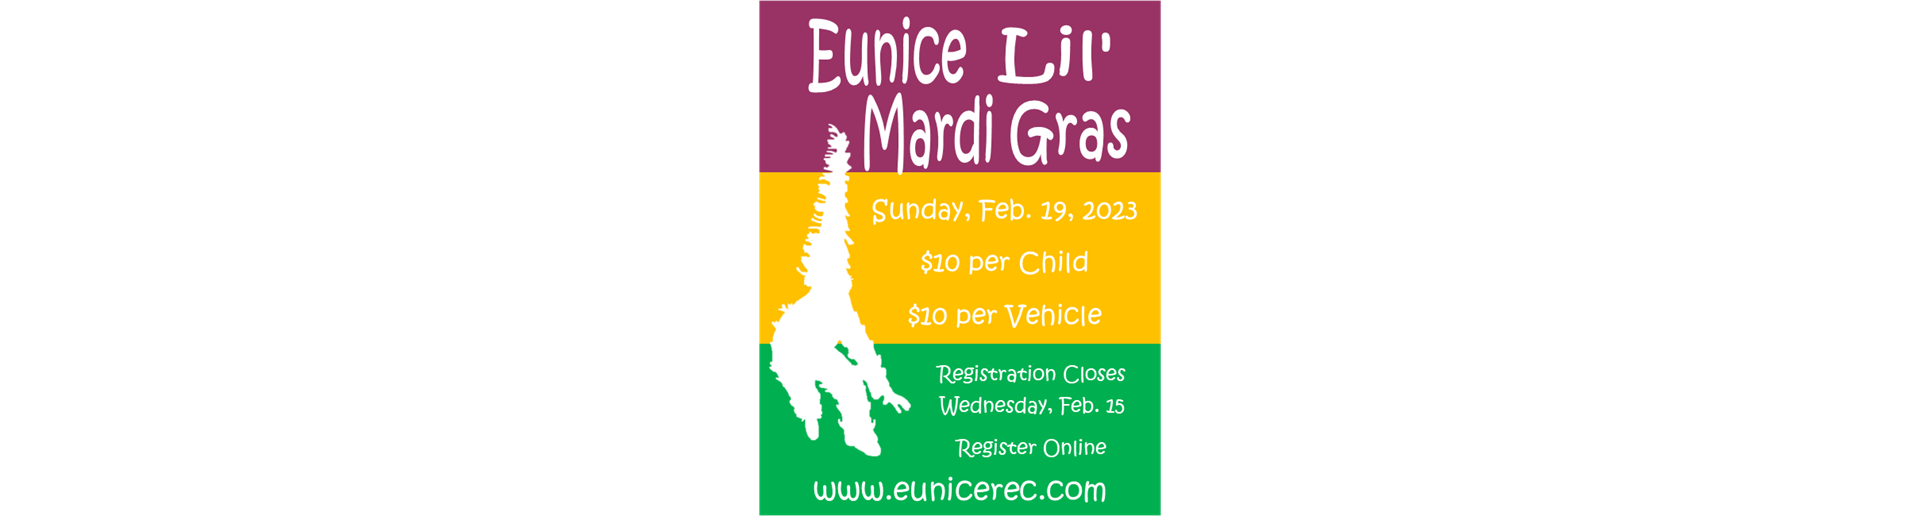 Eunice Lil' Mardi Gras